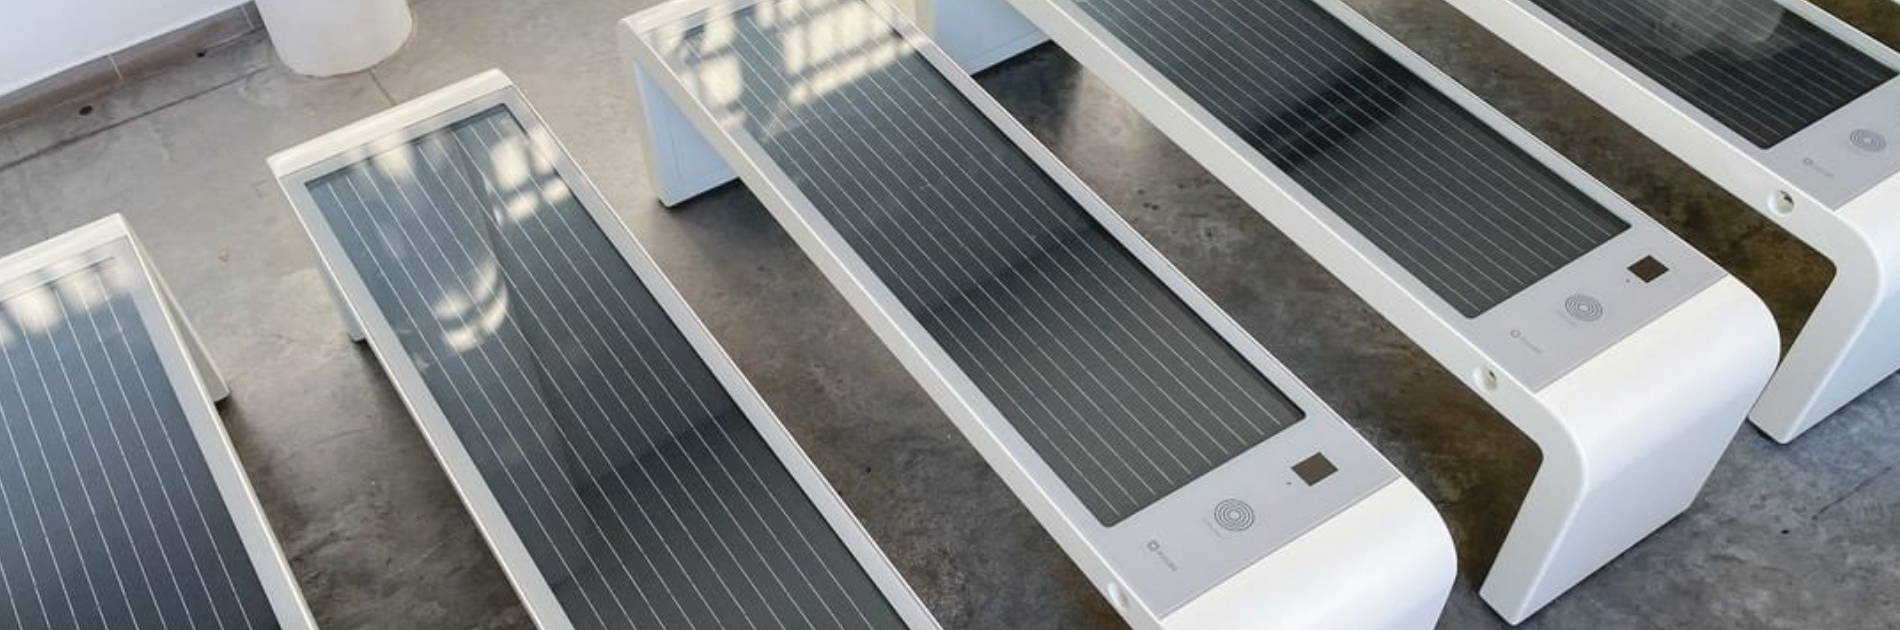 mobiliario solar